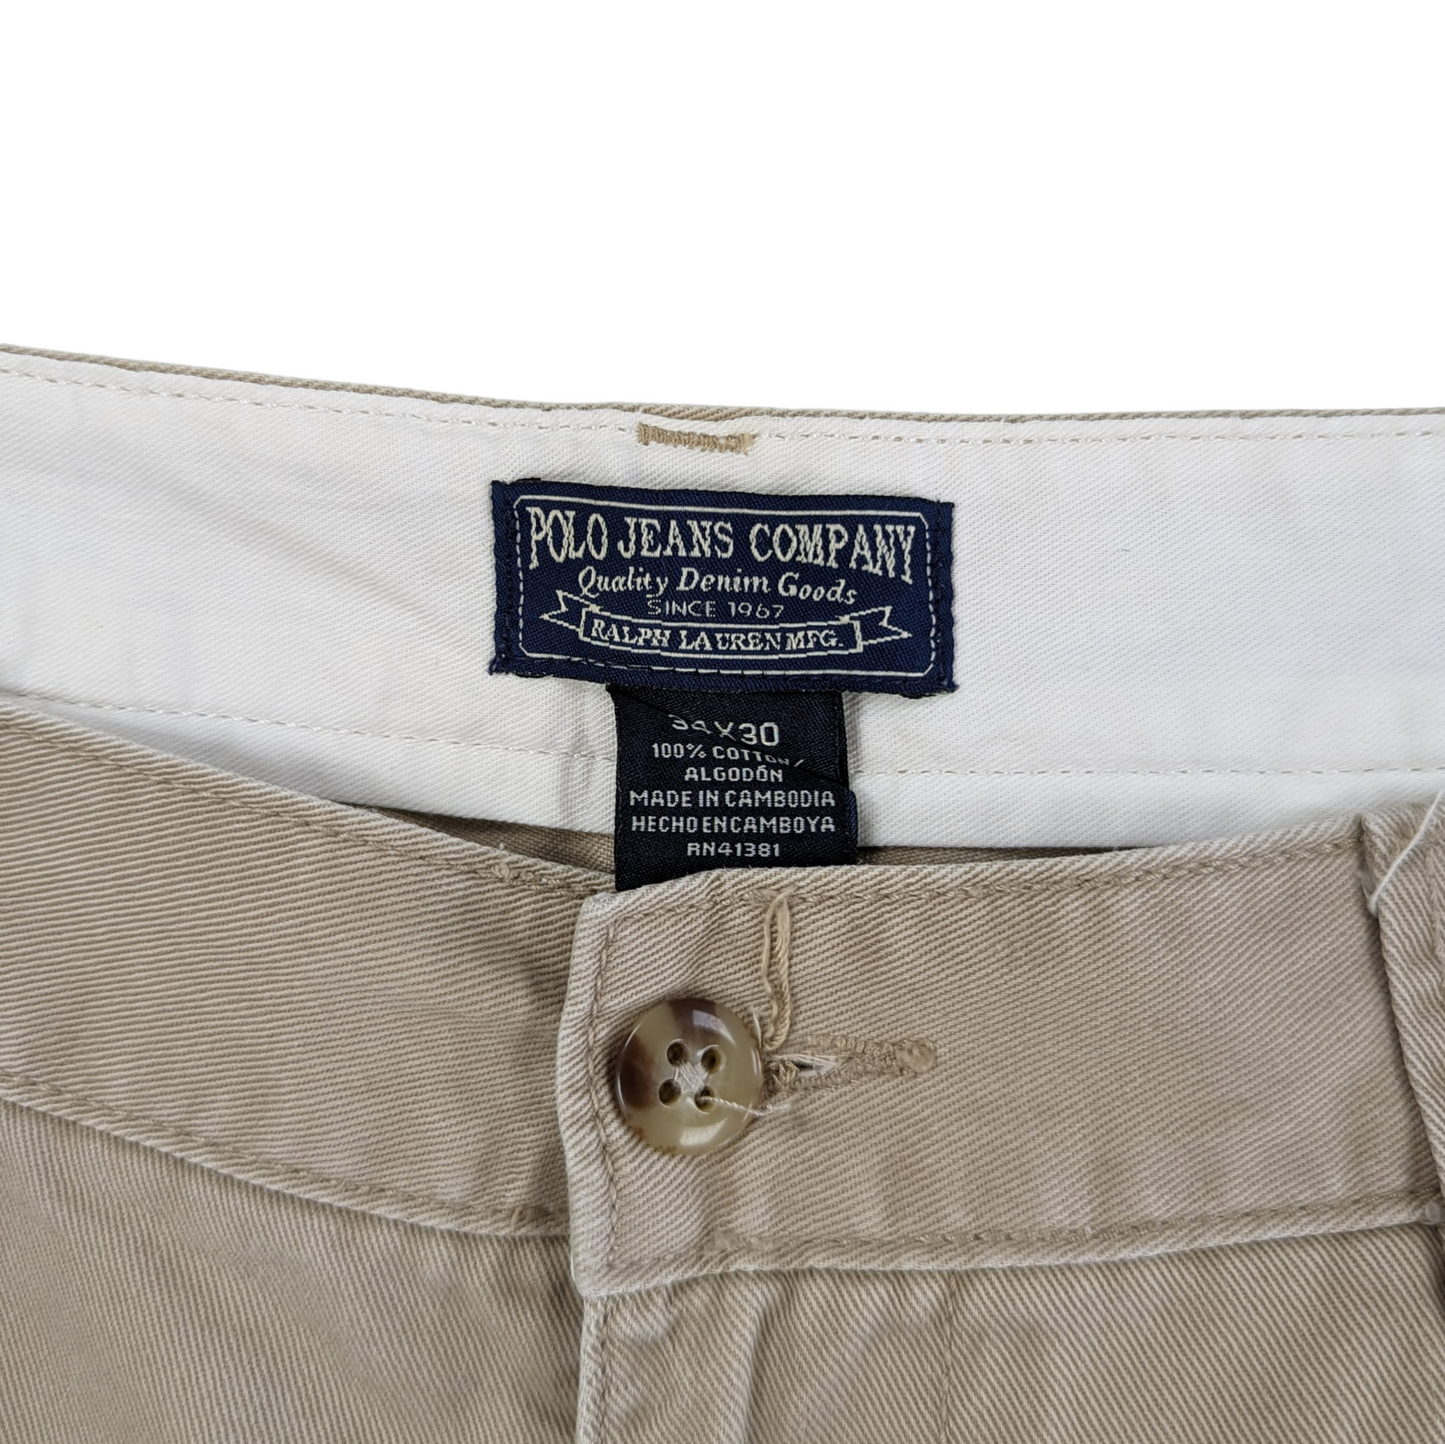 Ralph Lauren Trousers W34 L30